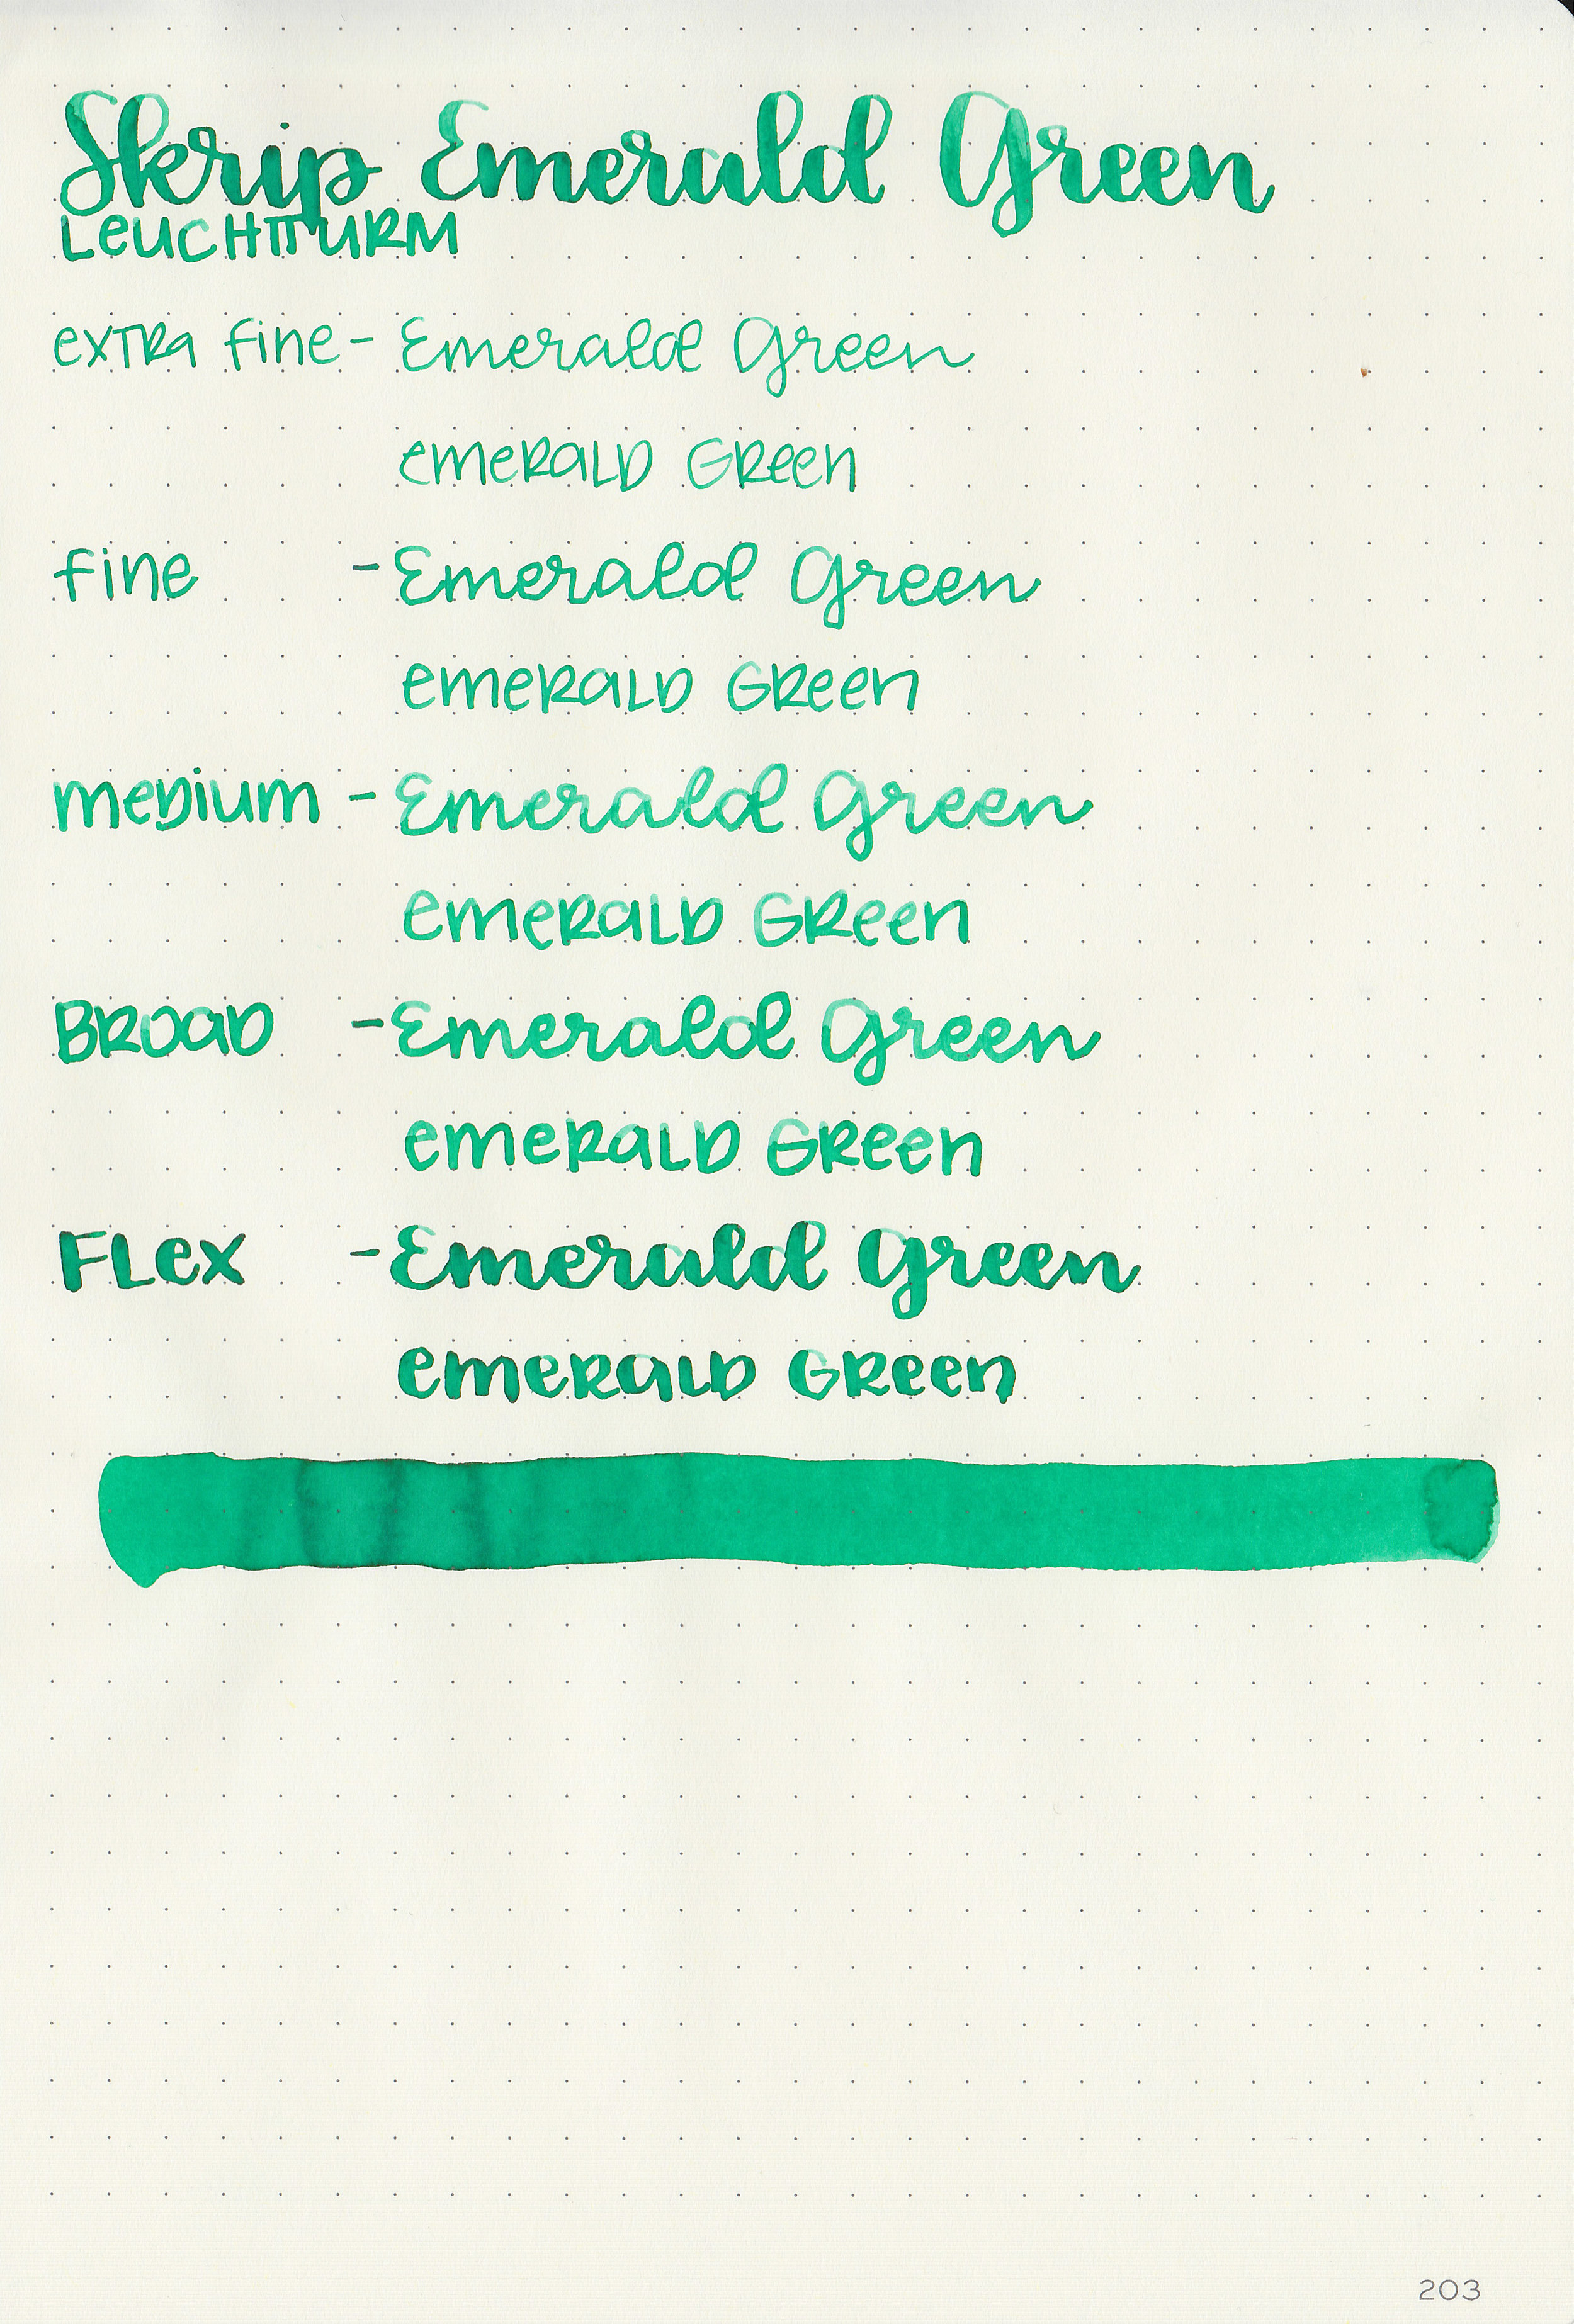 skr-emerald-green-13.jpg